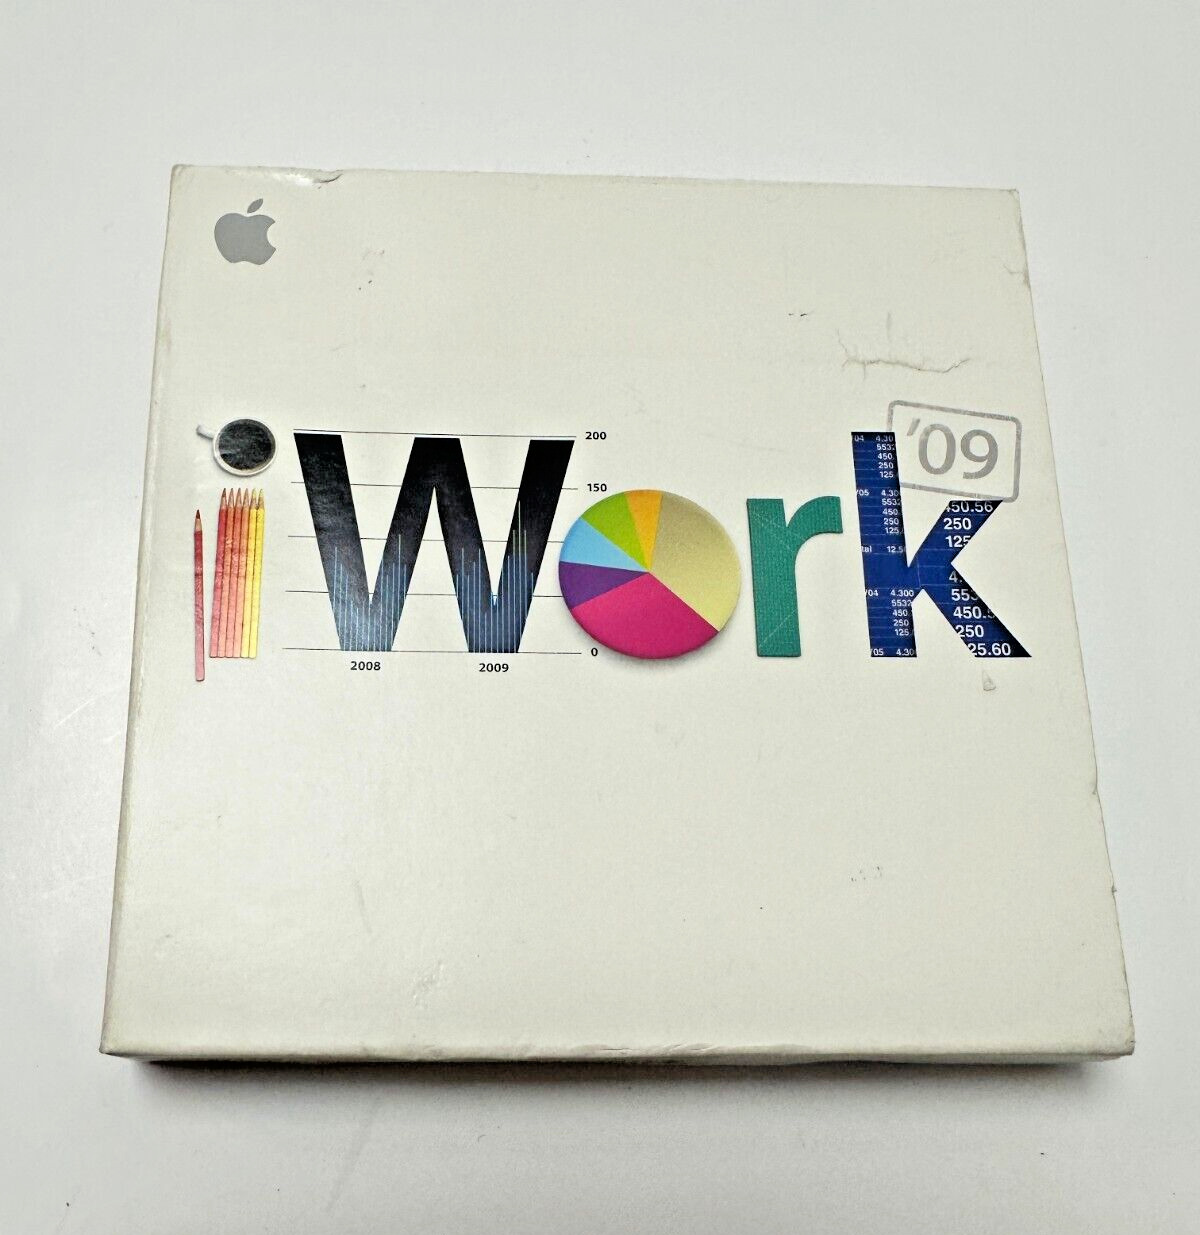 Apple iWork '09 Retail V9.0.1 